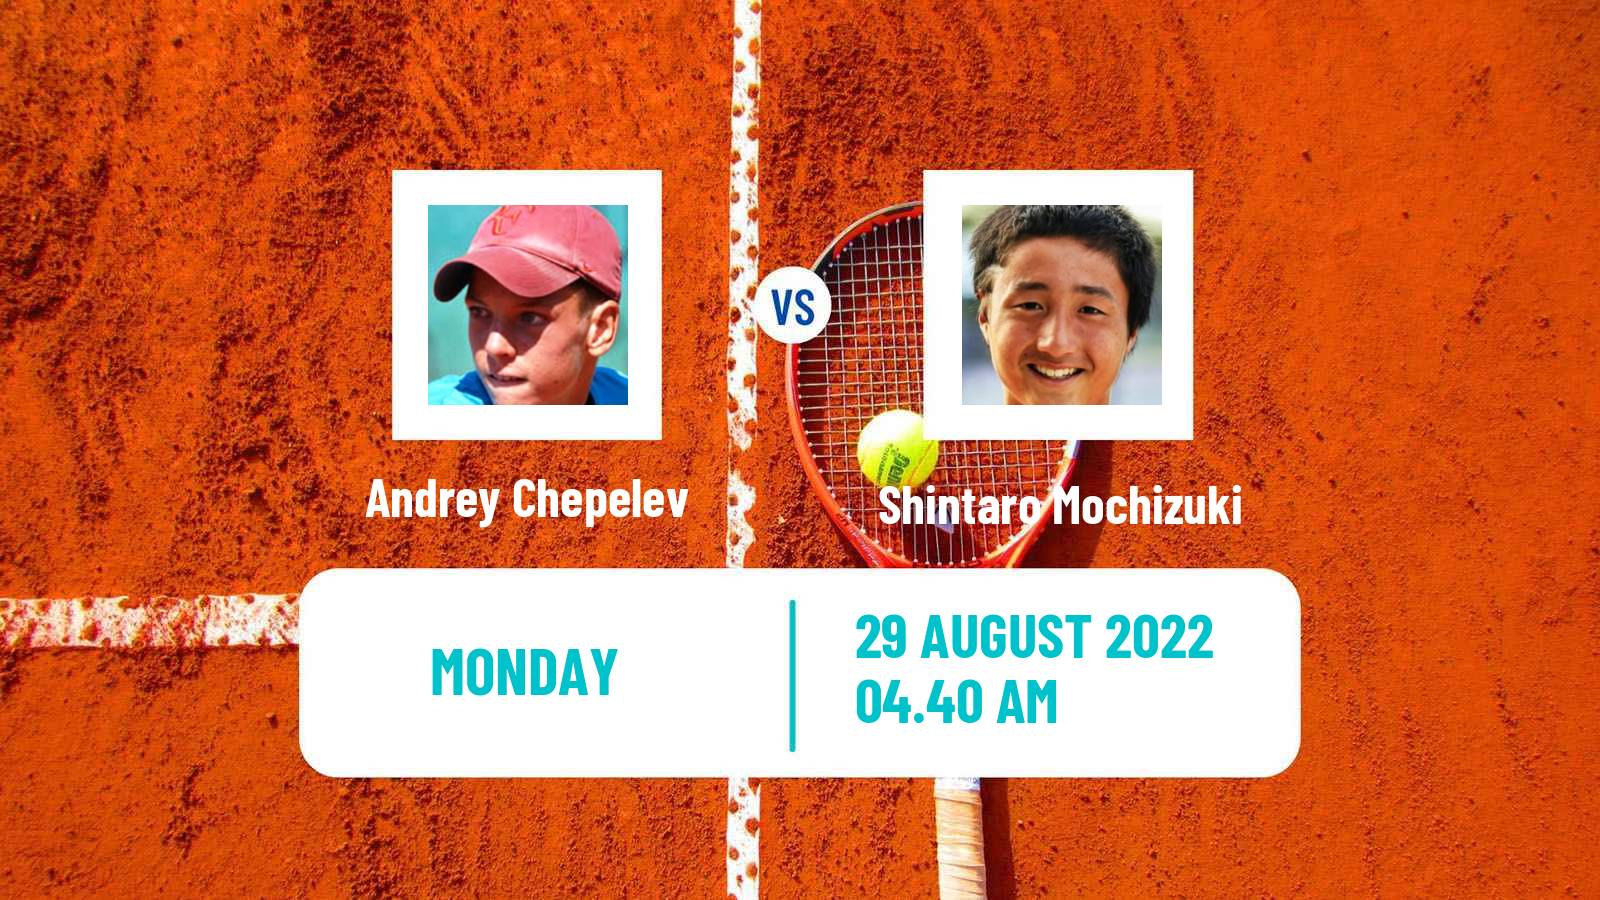 Tennis ATP Challenger Andrey Chepelev - Shintaro Mochizuki